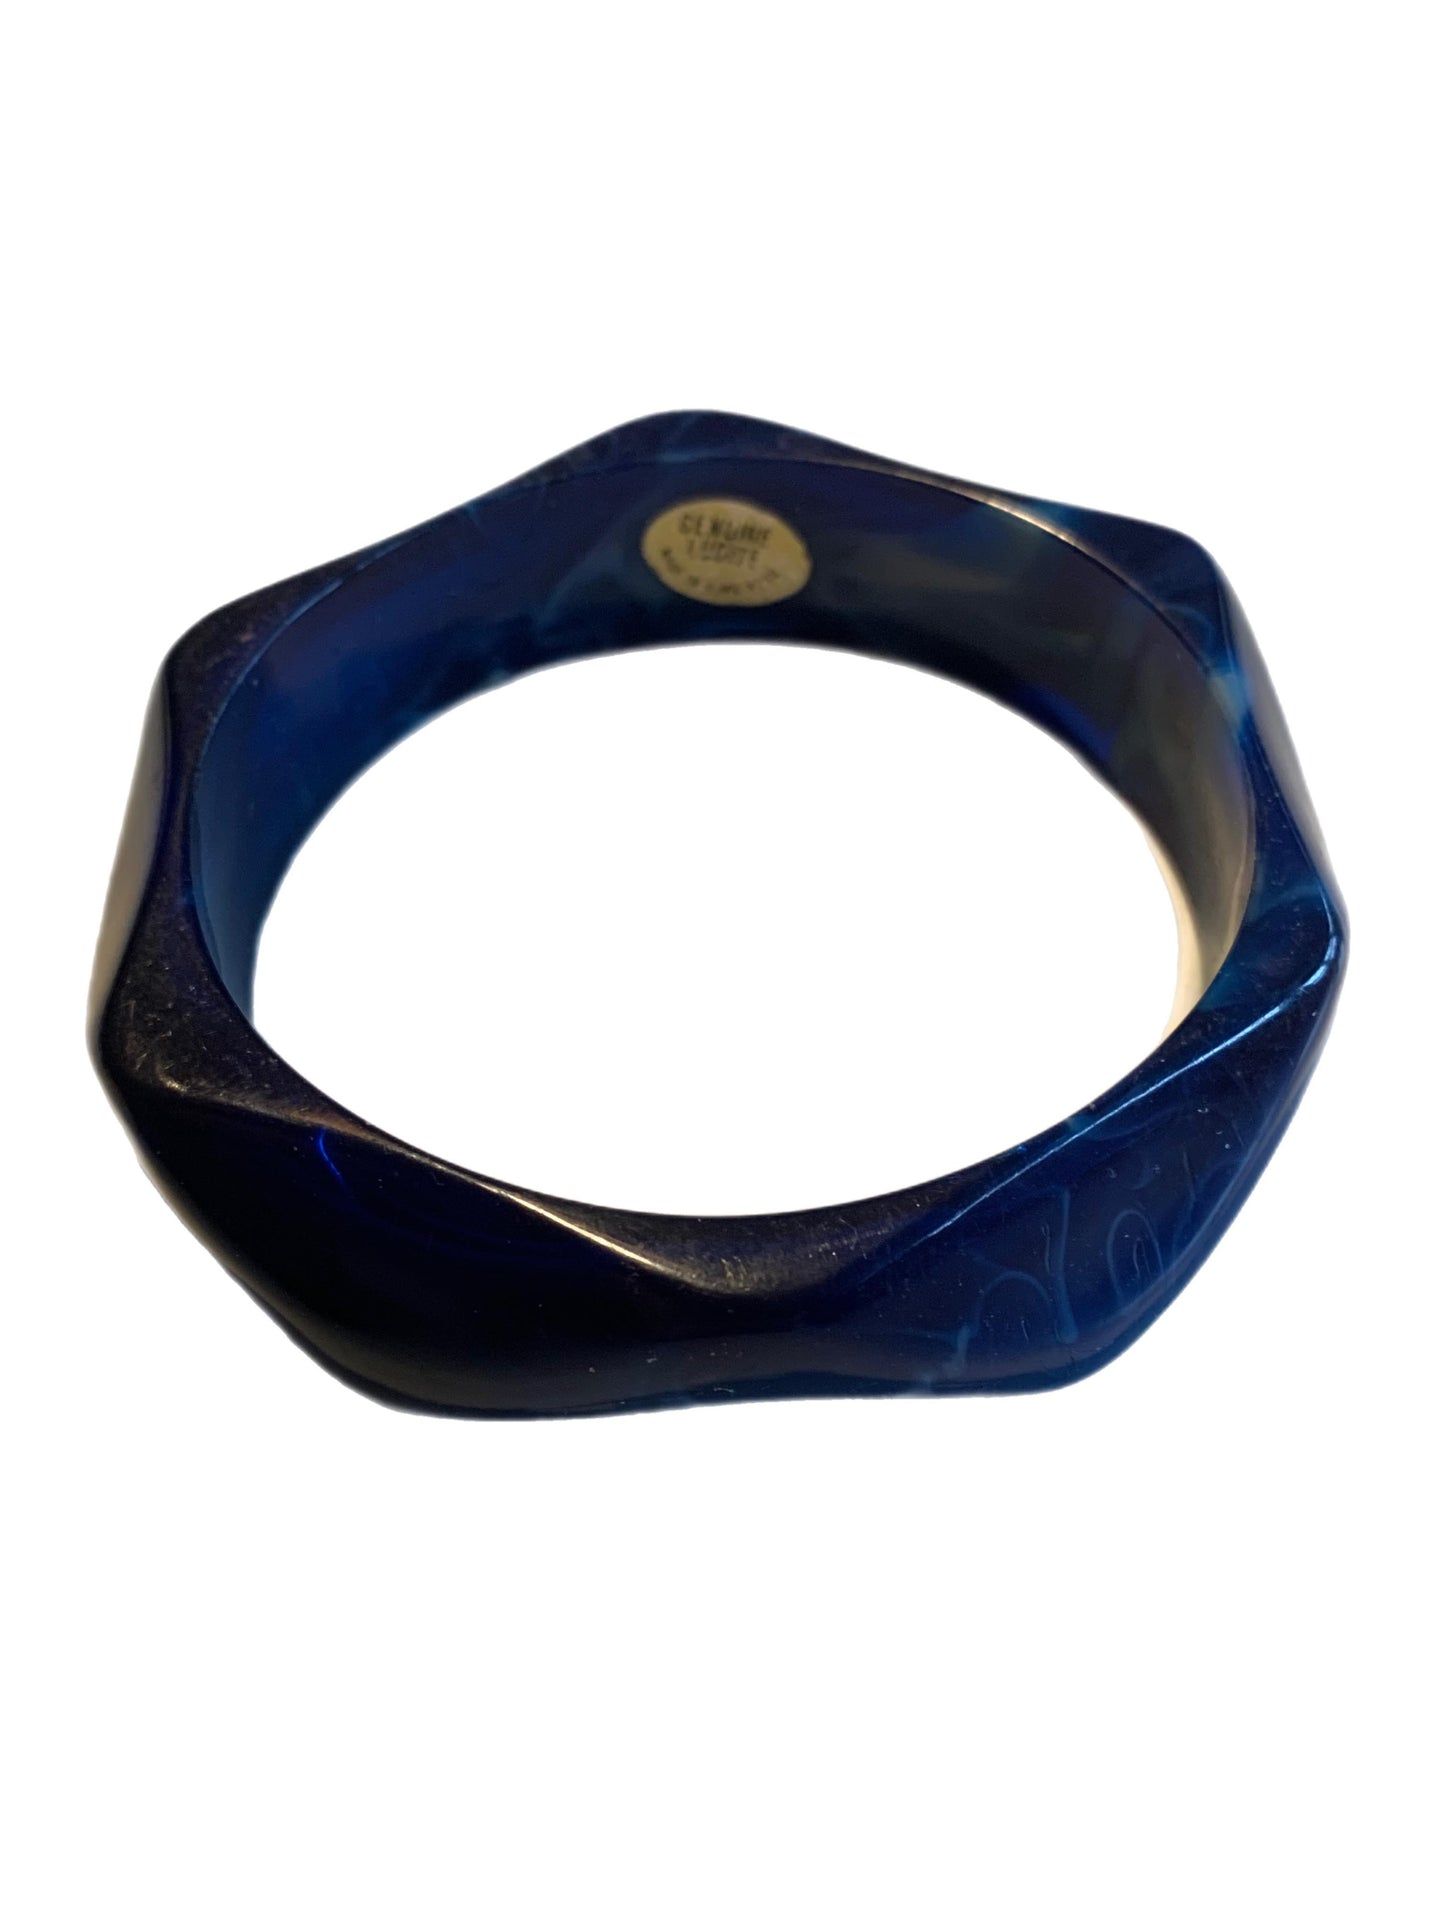 Marbled Blue Beveled Lucite Bangle Bracelet circa 1980s